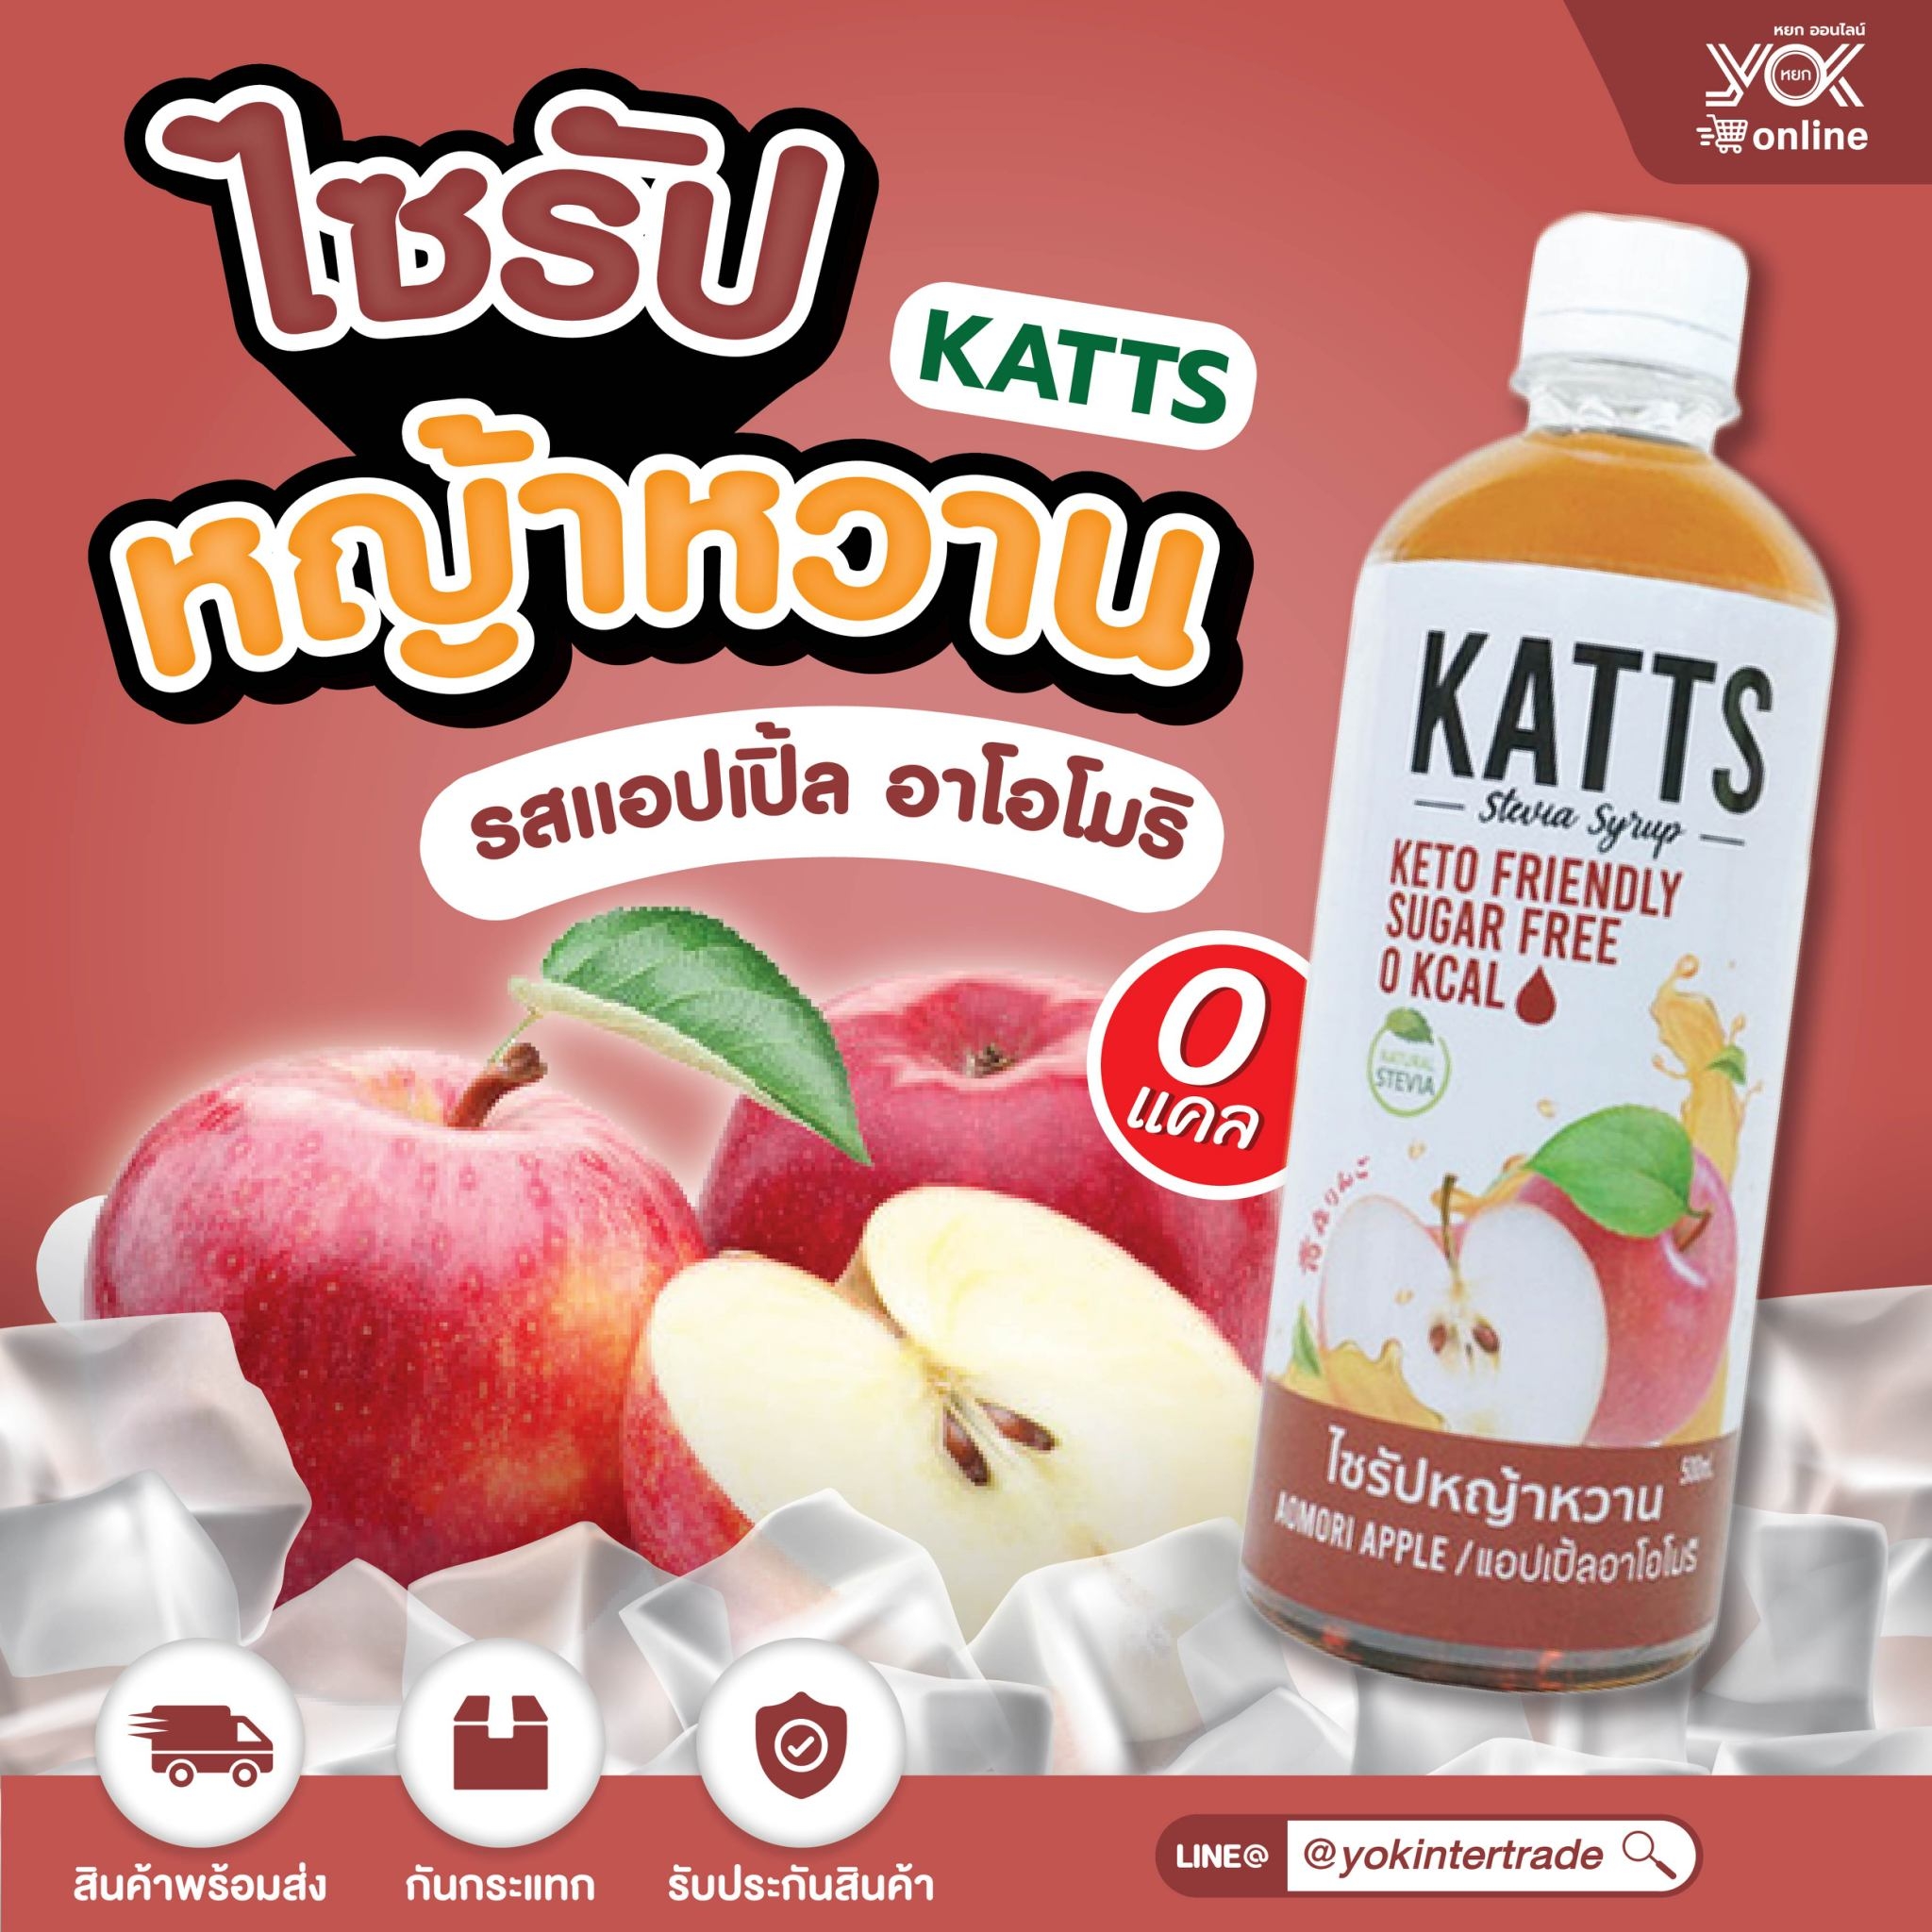 Katts ไซรับหญ้าหวาน แอปเปิ้ล 500 ml. คีโตทานได้ ไซรัปคีโต น้ำตาล 0% ให้พลังงาน 0 Cal. ไม่อ้วน หยกอินเตอร์เทรด